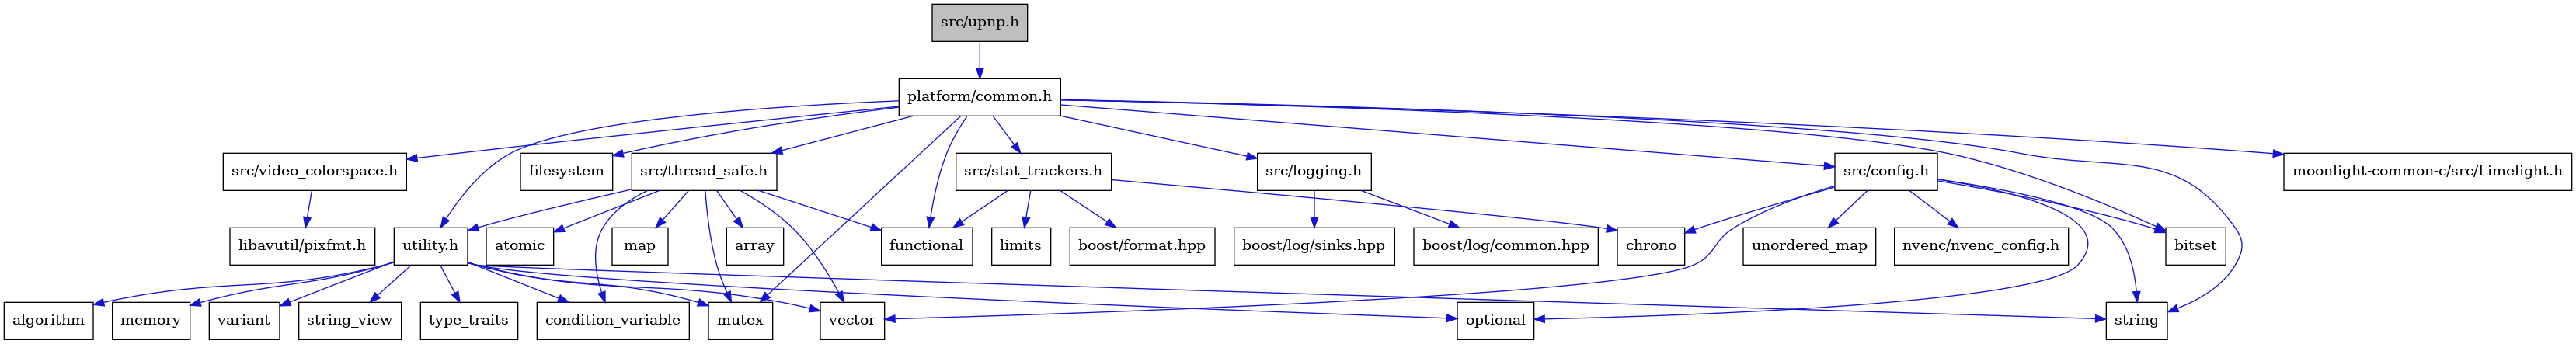 digraph {
    graph [bgcolor="#00000000"]
    node [shape=rectangle style=filled fillcolor="#FFFFFF" font=Helvetica padding=2]
    edge [color="#1414CE"]
    "22" [label="atomic" tooltip="atomic"]
    "5" [label="functional" tooltip="functional"]
    "18" [label="limits" tooltip="limits"]
    "16" [label="boost/log/sinks.hpp" tooltip="boost/log/sinks.hpp"]
    "31" [label="src/video_colorspace.h" tooltip="src/video_colorspace.h"]
    "4" [label="filesystem" tooltip="filesystem"]
    "20" [label="src/thread_safe.h" tooltip="src/thread_safe.h"]
    "17" [label="src/stat_trackers.h" tooltip="src/stat_trackers.h"]
    "30" [label="variant" tooltip="variant"]
    "13" [label="nvenc/nvenc_config.h" tooltip="nvenc/nvenc_config.h"]
    "19" [label="boost/format.hpp" tooltip="boost/format.hpp"]
    "7" [label="string" tooltip="string"]
    "14" [label="src/logging.h" tooltip="src/logging.h"]
    "24" [label="map" tooltip="map"]
    "25" [label="utility.h" tooltip="utility.h"]
    "1" [label="src/upnp.h" tooltip="src/upnp.h" fillcolor="#BFBFBF"]
    "28" [label="string_view" tooltip="string_view"]
    "23" [label="condition_variable" tooltip="condition_variable"]
    "3" [label="bitset" tooltip="bitset"]
    "32" [label="libavutil/pixfmt.h" tooltip="libavutil/pixfmt.h"]
    "10" [label="optional" tooltip="optional"]
    "12" [label="vector" tooltip="vector"]
    "21" [label="array" tooltip="array"]
    "8" [label="src/config.h" tooltip="src/config.h"]
    "2" [label="platform/common.h" tooltip="platform/common.h"]
    "11" [label="unordered_map" tooltip="unordered_map"]
    "6" [label="mutex" tooltip="mutex"]
    "9" [label="chrono" tooltip="chrono"]
    "29" [label="type_traits" tooltip="type_traits"]
    "33" [label="moonlight-common-c/src/Limelight.h" tooltip="moonlight-common-c/src/Limelight.h"]
    "15" [label="boost/log/common.hpp" tooltip="boost/log/common.hpp"]
    "26" [label="algorithm" tooltip="algorithm"]
    "27" [label="memory" tooltip="memory"]
    "31" -> "32" [dir=forward tooltip="include"]
    "20" -> "21" [dir=forward tooltip="include"]
    "20" -> "22" [dir=forward tooltip="include"]
    "20" -> "23" [dir=forward tooltip="include"]
    "20" -> "5" [dir=forward tooltip="include"]
    "20" -> "24" [dir=forward tooltip="include"]
    "20" -> "6" [dir=forward tooltip="include"]
    "20" -> "12" [dir=forward tooltip="include"]
    "20" -> "25" [dir=forward tooltip="include"]
    "17" -> "9" [dir=forward tooltip="include"]
    "17" -> "5" [dir=forward tooltip="include"]
    "17" -> "18" [dir=forward tooltip="include"]
    "17" -> "19" [dir=forward tooltip="include"]
    "14" -> "15" [dir=forward tooltip="include"]
    "14" -> "16" [dir=forward tooltip="include"]
    "25" -> "26" [dir=forward tooltip="include"]
    "25" -> "23" [dir=forward tooltip="include"]
    "25" -> "27" [dir=forward tooltip="include"]
    "25" -> "6" [dir=forward tooltip="include"]
    "25" -> "10" [dir=forward tooltip="include"]
    "25" -> "7" [dir=forward tooltip="include"]
    "25" -> "28" [dir=forward tooltip="include"]
    "25" -> "29" [dir=forward tooltip="include"]
    "25" -> "30" [dir=forward tooltip="include"]
    "25" -> "12" [dir=forward tooltip="include"]
    "1" -> "2" [dir=forward tooltip="include"]
    "8" -> "3" [dir=forward tooltip="include"]
    "8" -> "9" [dir=forward tooltip="include"]
    "8" -> "10" [dir=forward tooltip="include"]
    "8" -> "7" [dir=forward tooltip="include"]
    "8" -> "11" [dir=forward tooltip="include"]
    "8" -> "12" [dir=forward tooltip="include"]
    "8" -> "13" [dir=forward tooltip="include"]
    "2" -> "3" [dir=forward tooltip="include"]
    "2" -> "4" [dir=forward tooltip="include"]
    "2" -> "5" [dir=forward tooltip="include"]
    "2" -> "6" [dir=forward tooltip="include"]
    "2" -> "7" [dir=forward tooltip="include"]
    "2" -> "8" [dir=forward tooltip="include"]
    "2" -> "14" [dir=forward tooltip="include"]
    "2" -> "17" [dir=forward tooltip="include"]
    "2" -> "20" [dir=forward tooltip="include"]
    "2" -> "25" [dir=forward tooltip="include"]
    "2" -> "31" [dir=forward tooltip="include"]
    "2" -> "33" [dir=forward tooltip="include"]
}